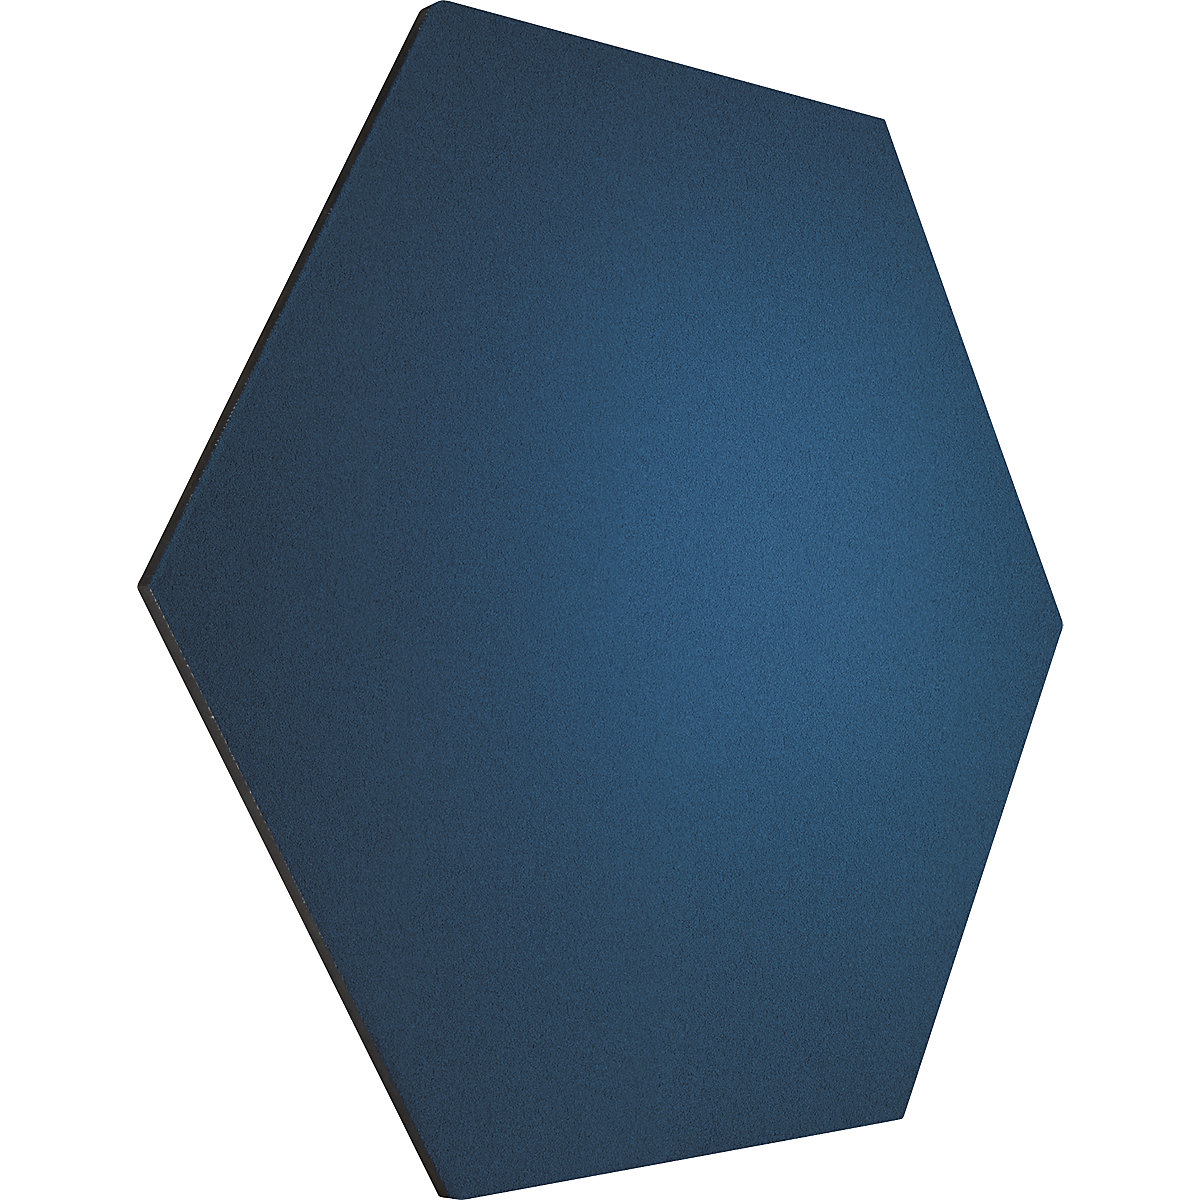 Hexagonal designer pin board – Chameleon, cork, WxH 600 x 600 mm, dark blue-28